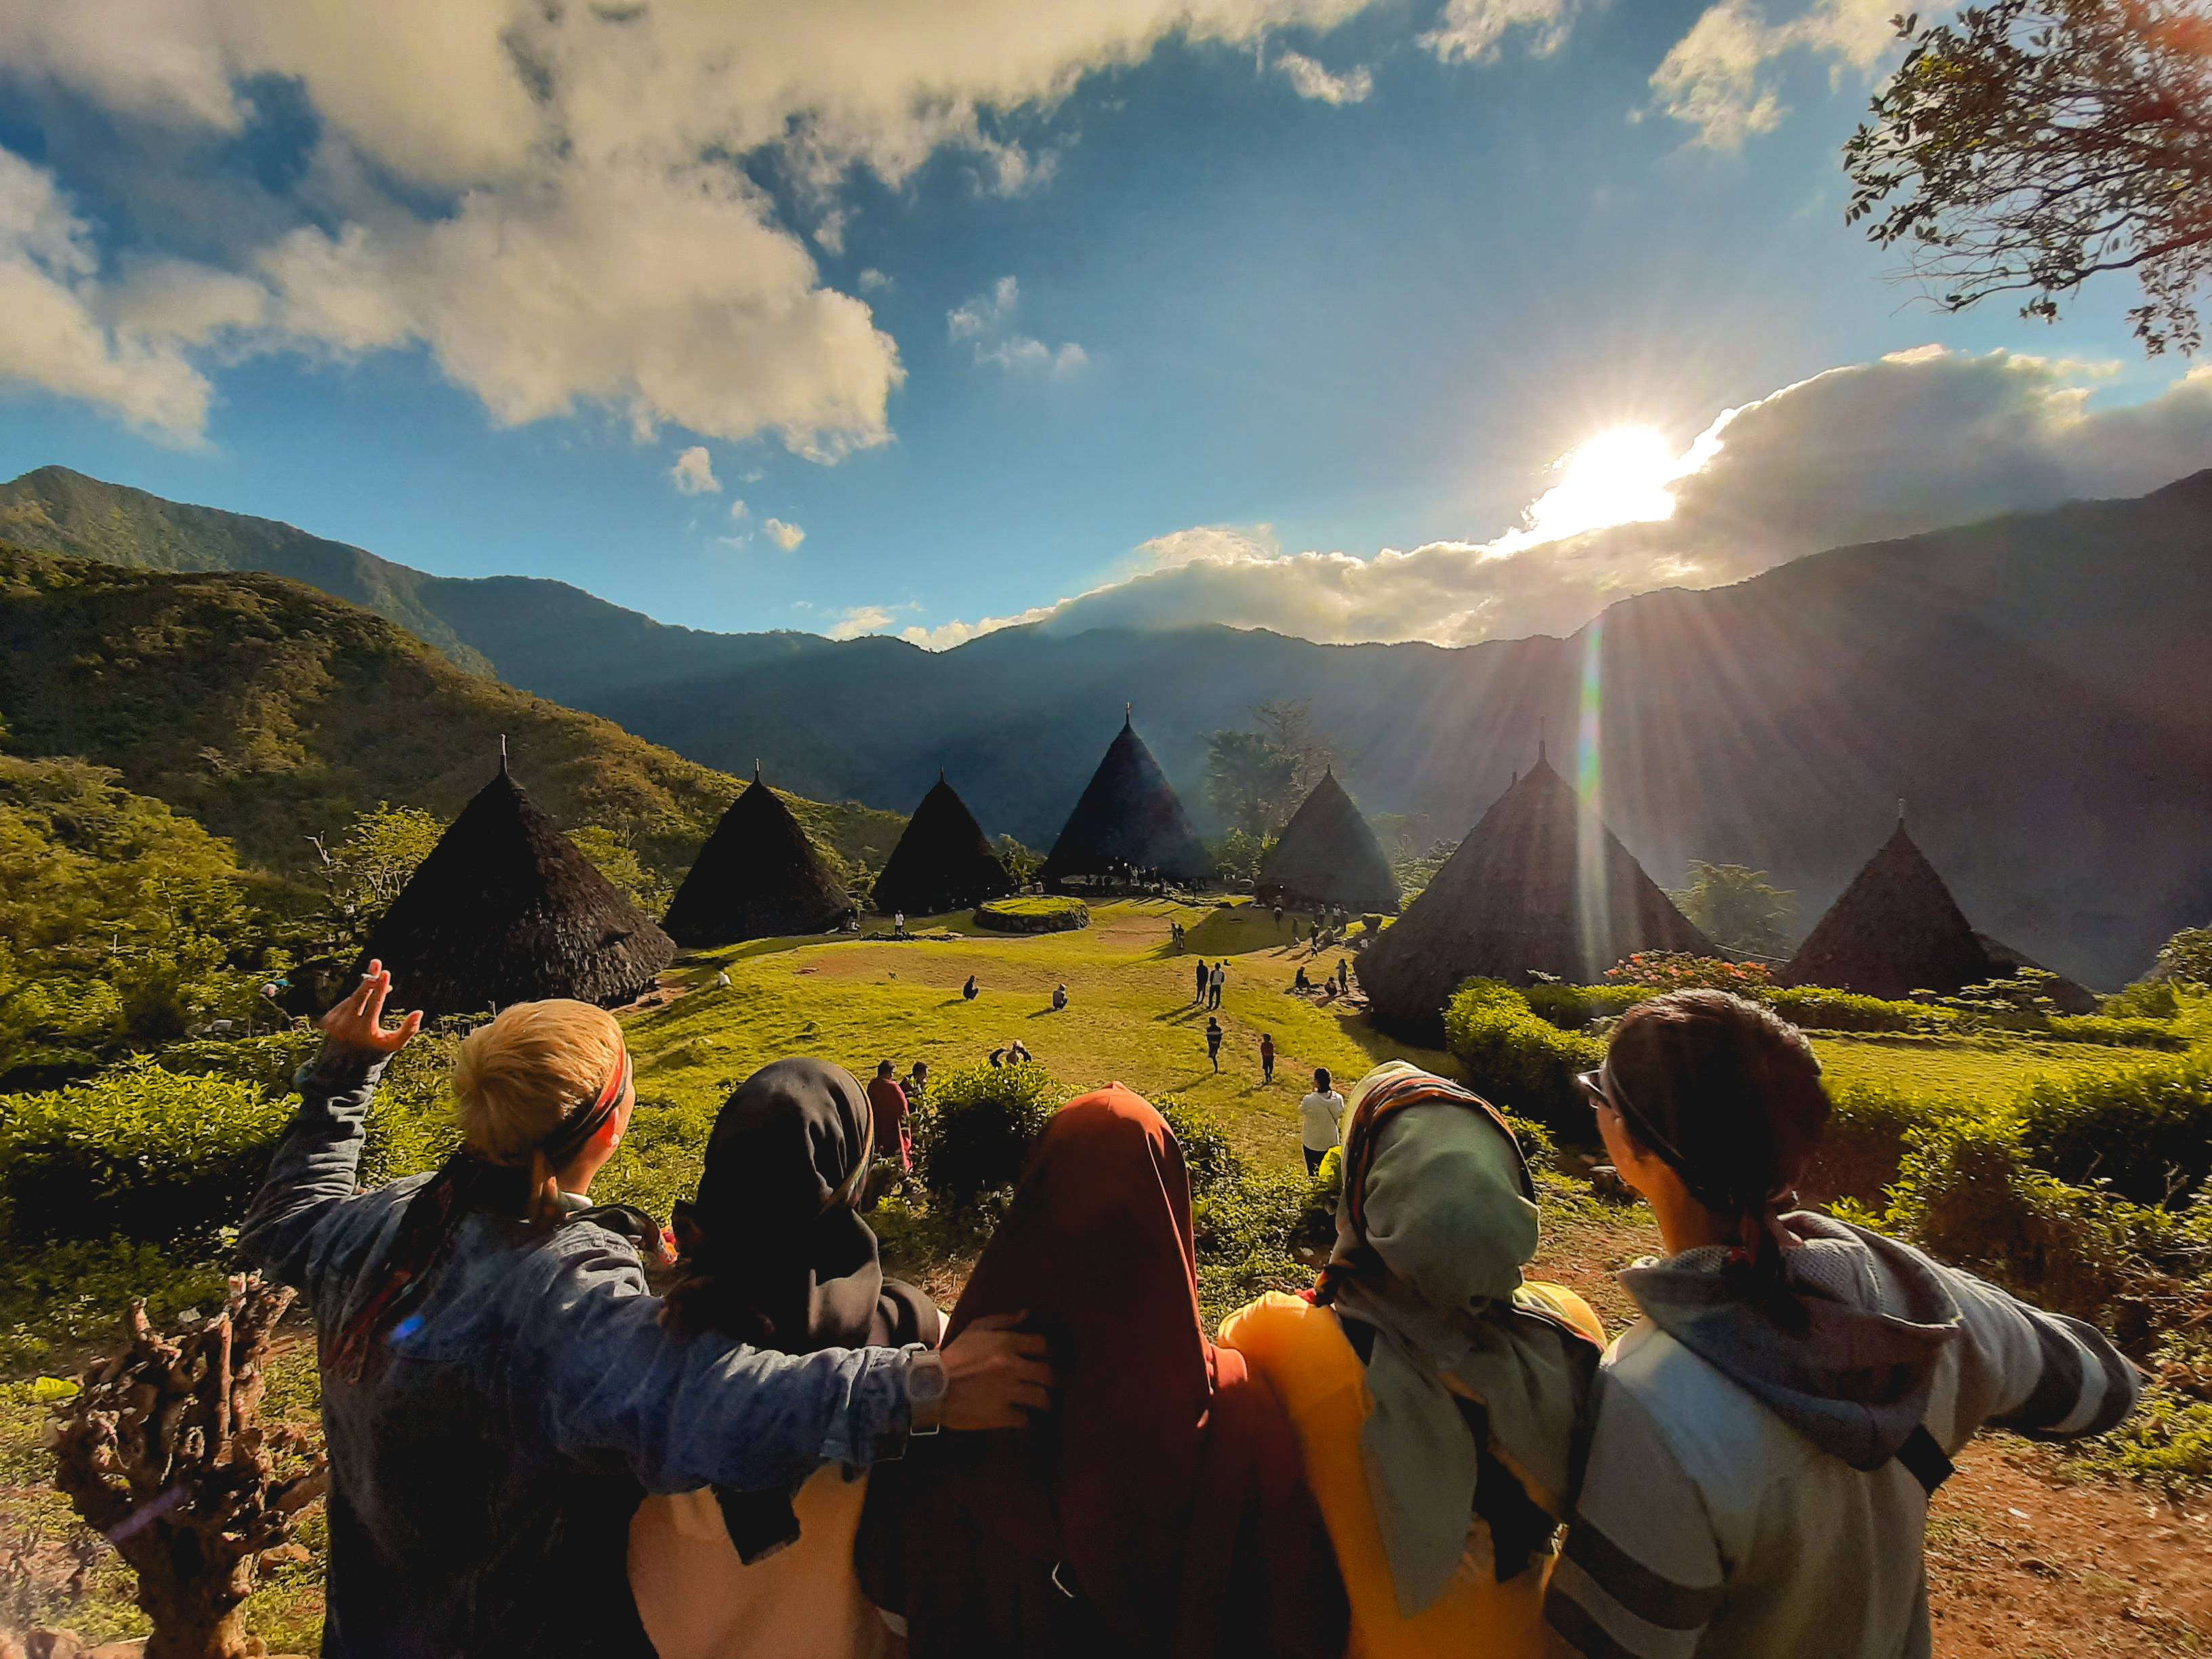 Itinerary Murah di Wae Rebo, Budget Aman Liburan Nyaman